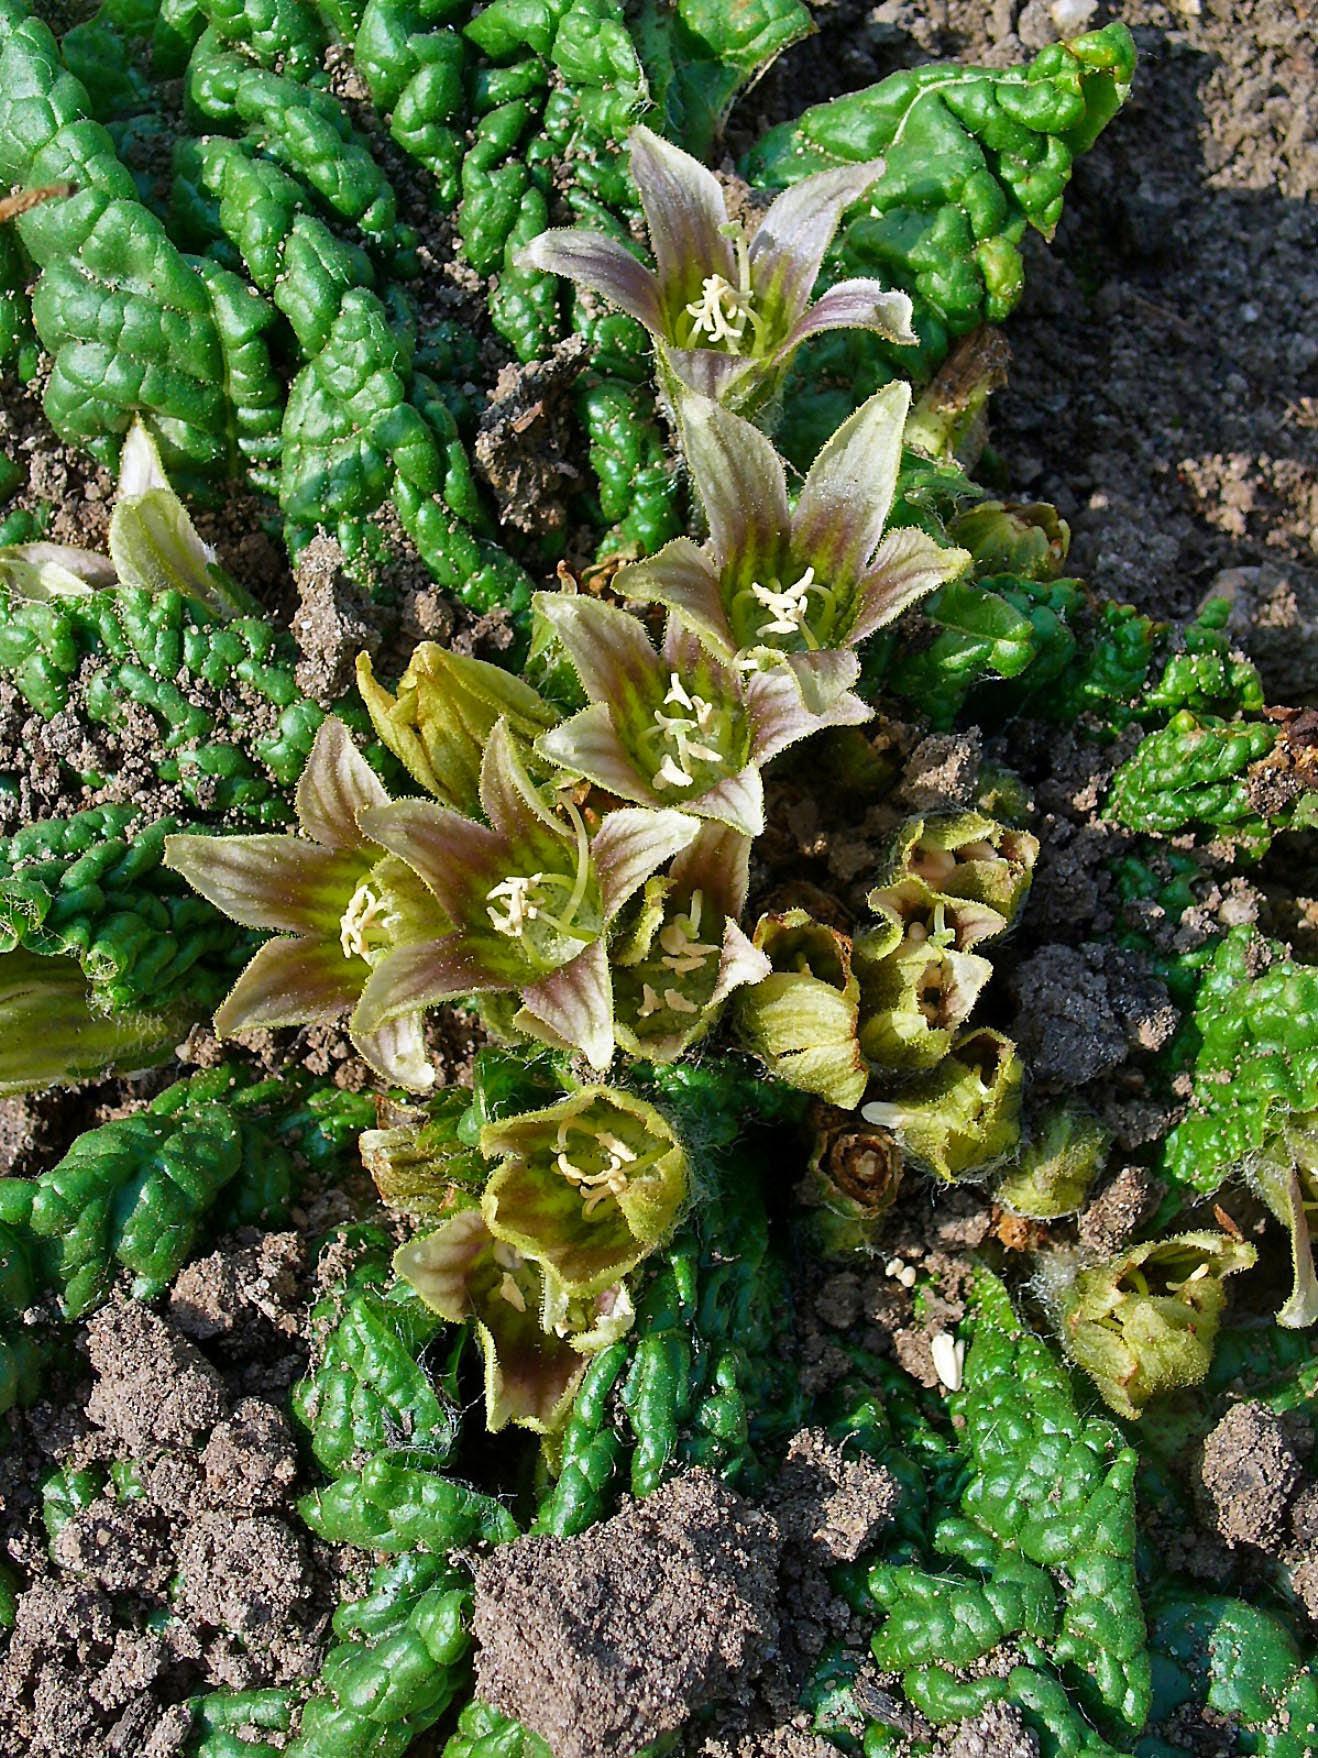 Mandrake (Mandragora offificinarum) - Witching Plants